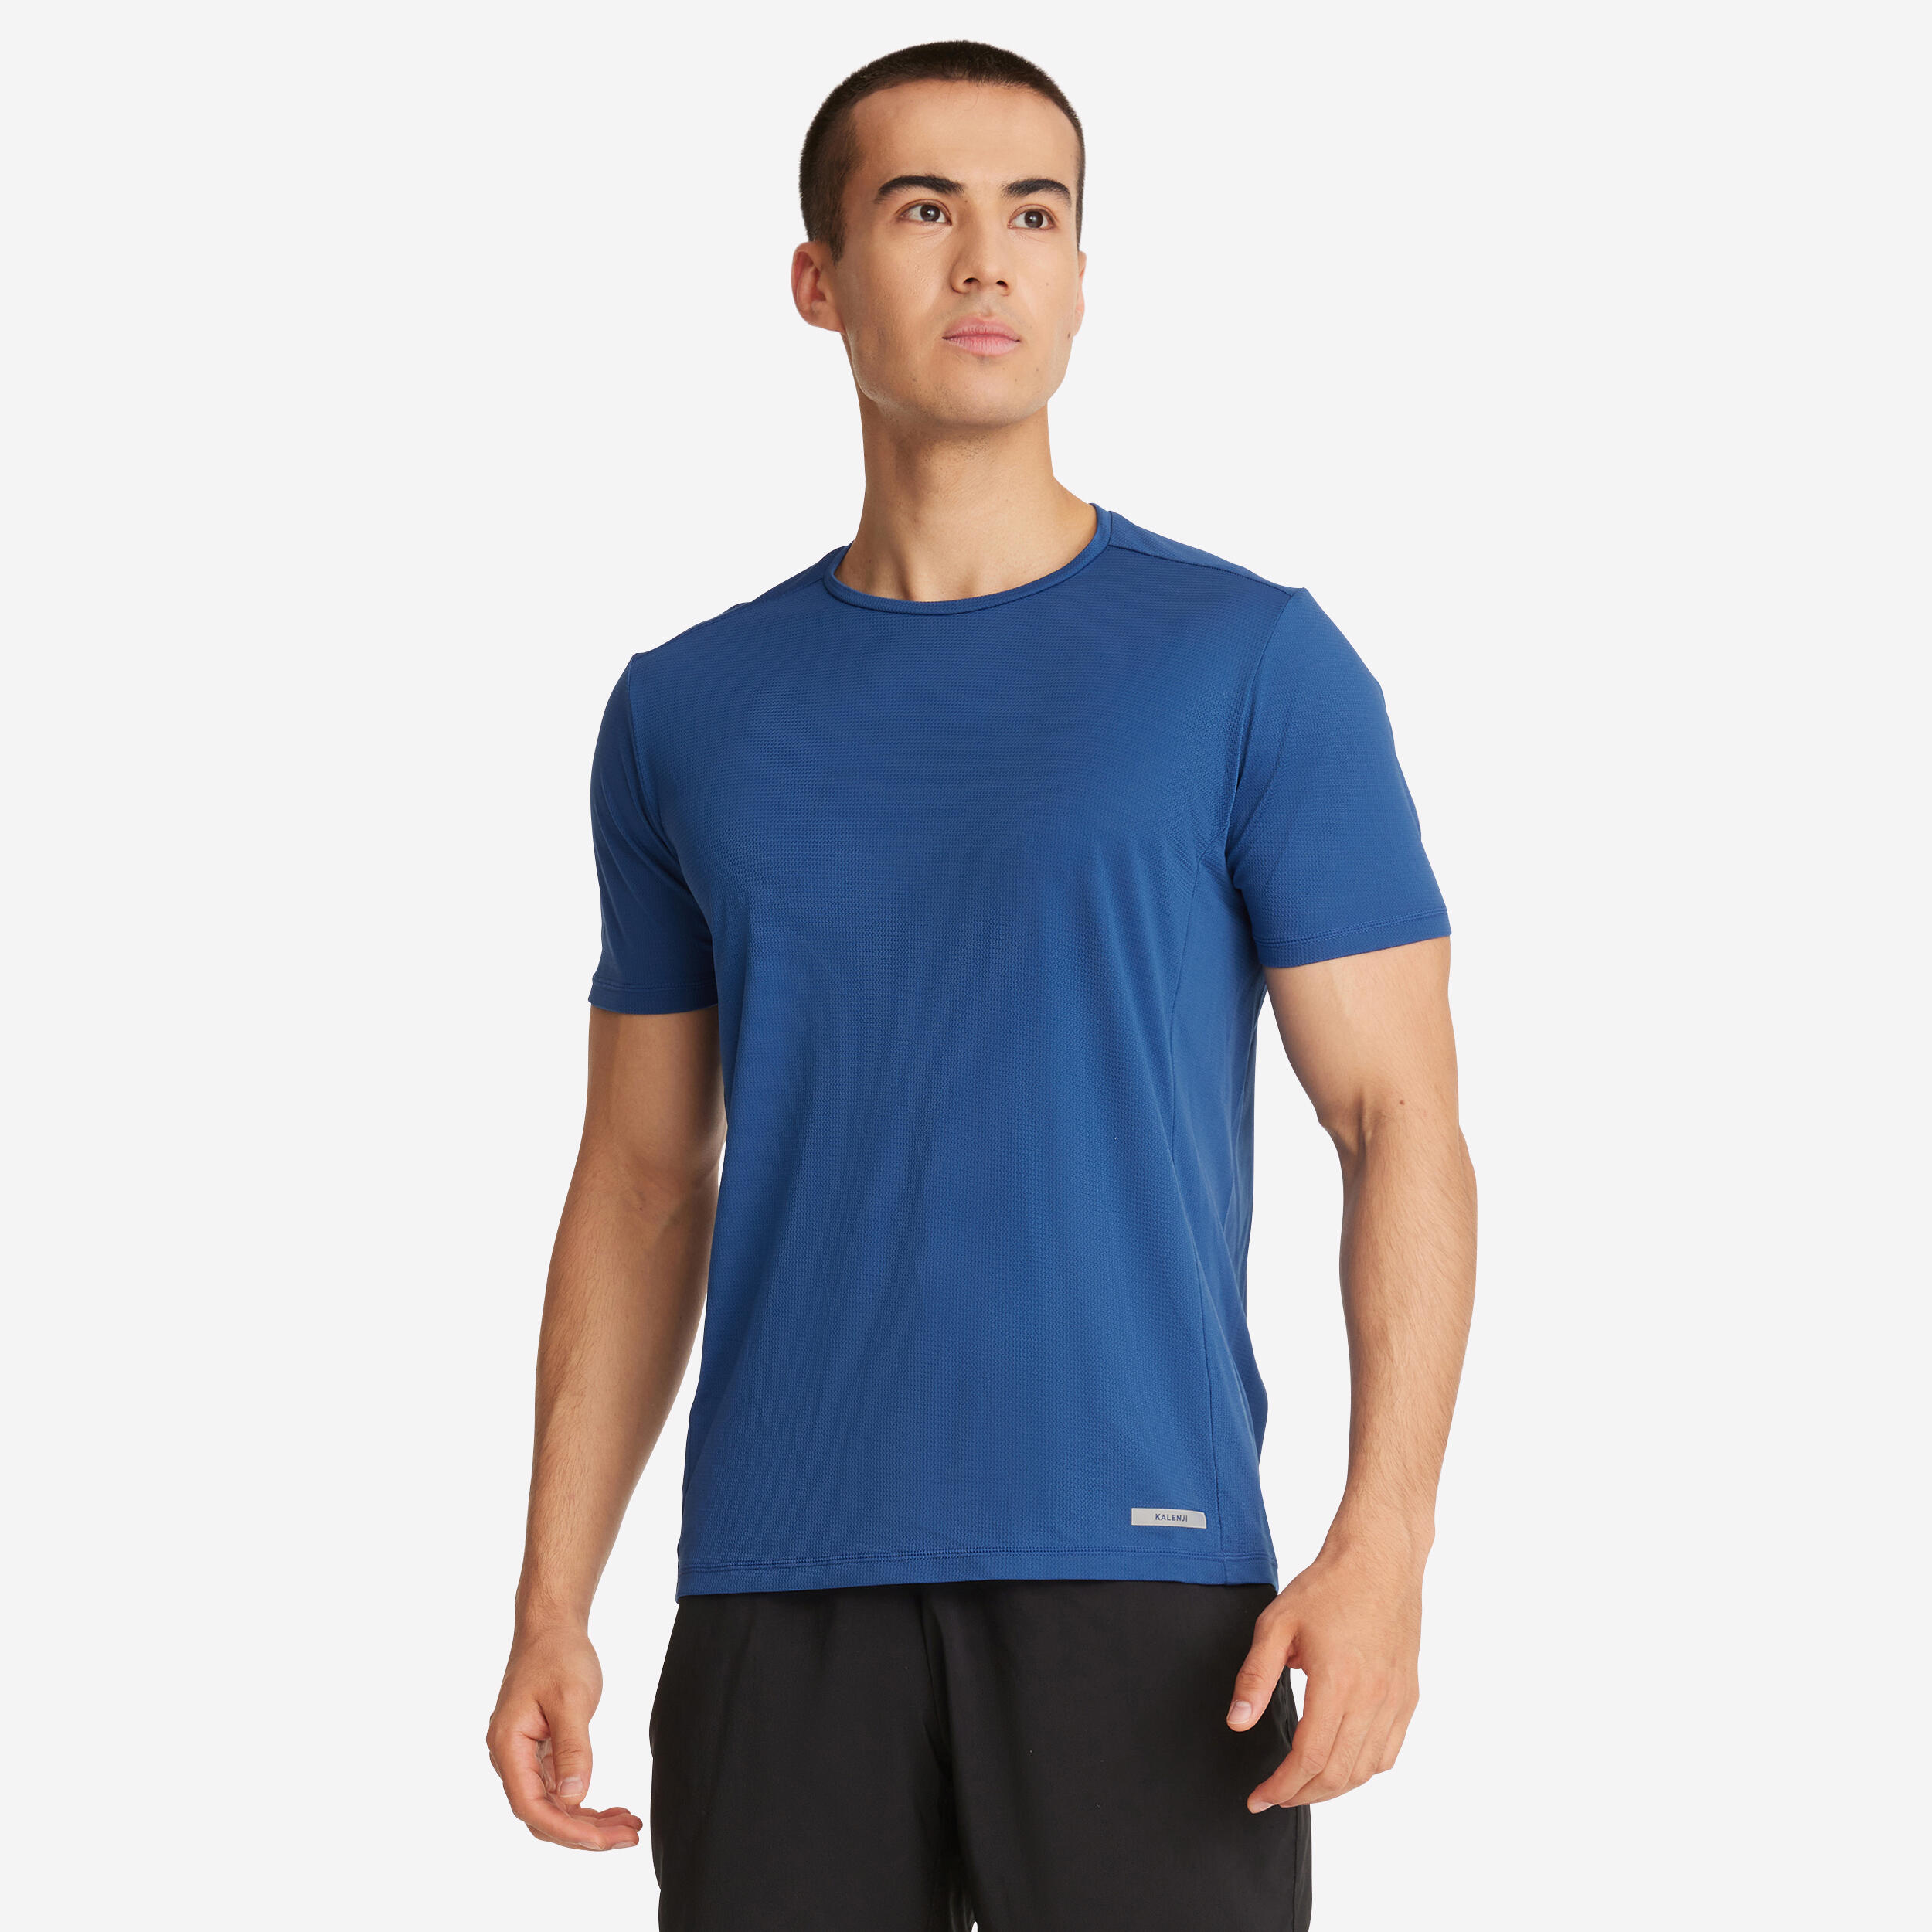 Kalenji Dry Men's Running Breathable T-Shirt - Blue - 3XL